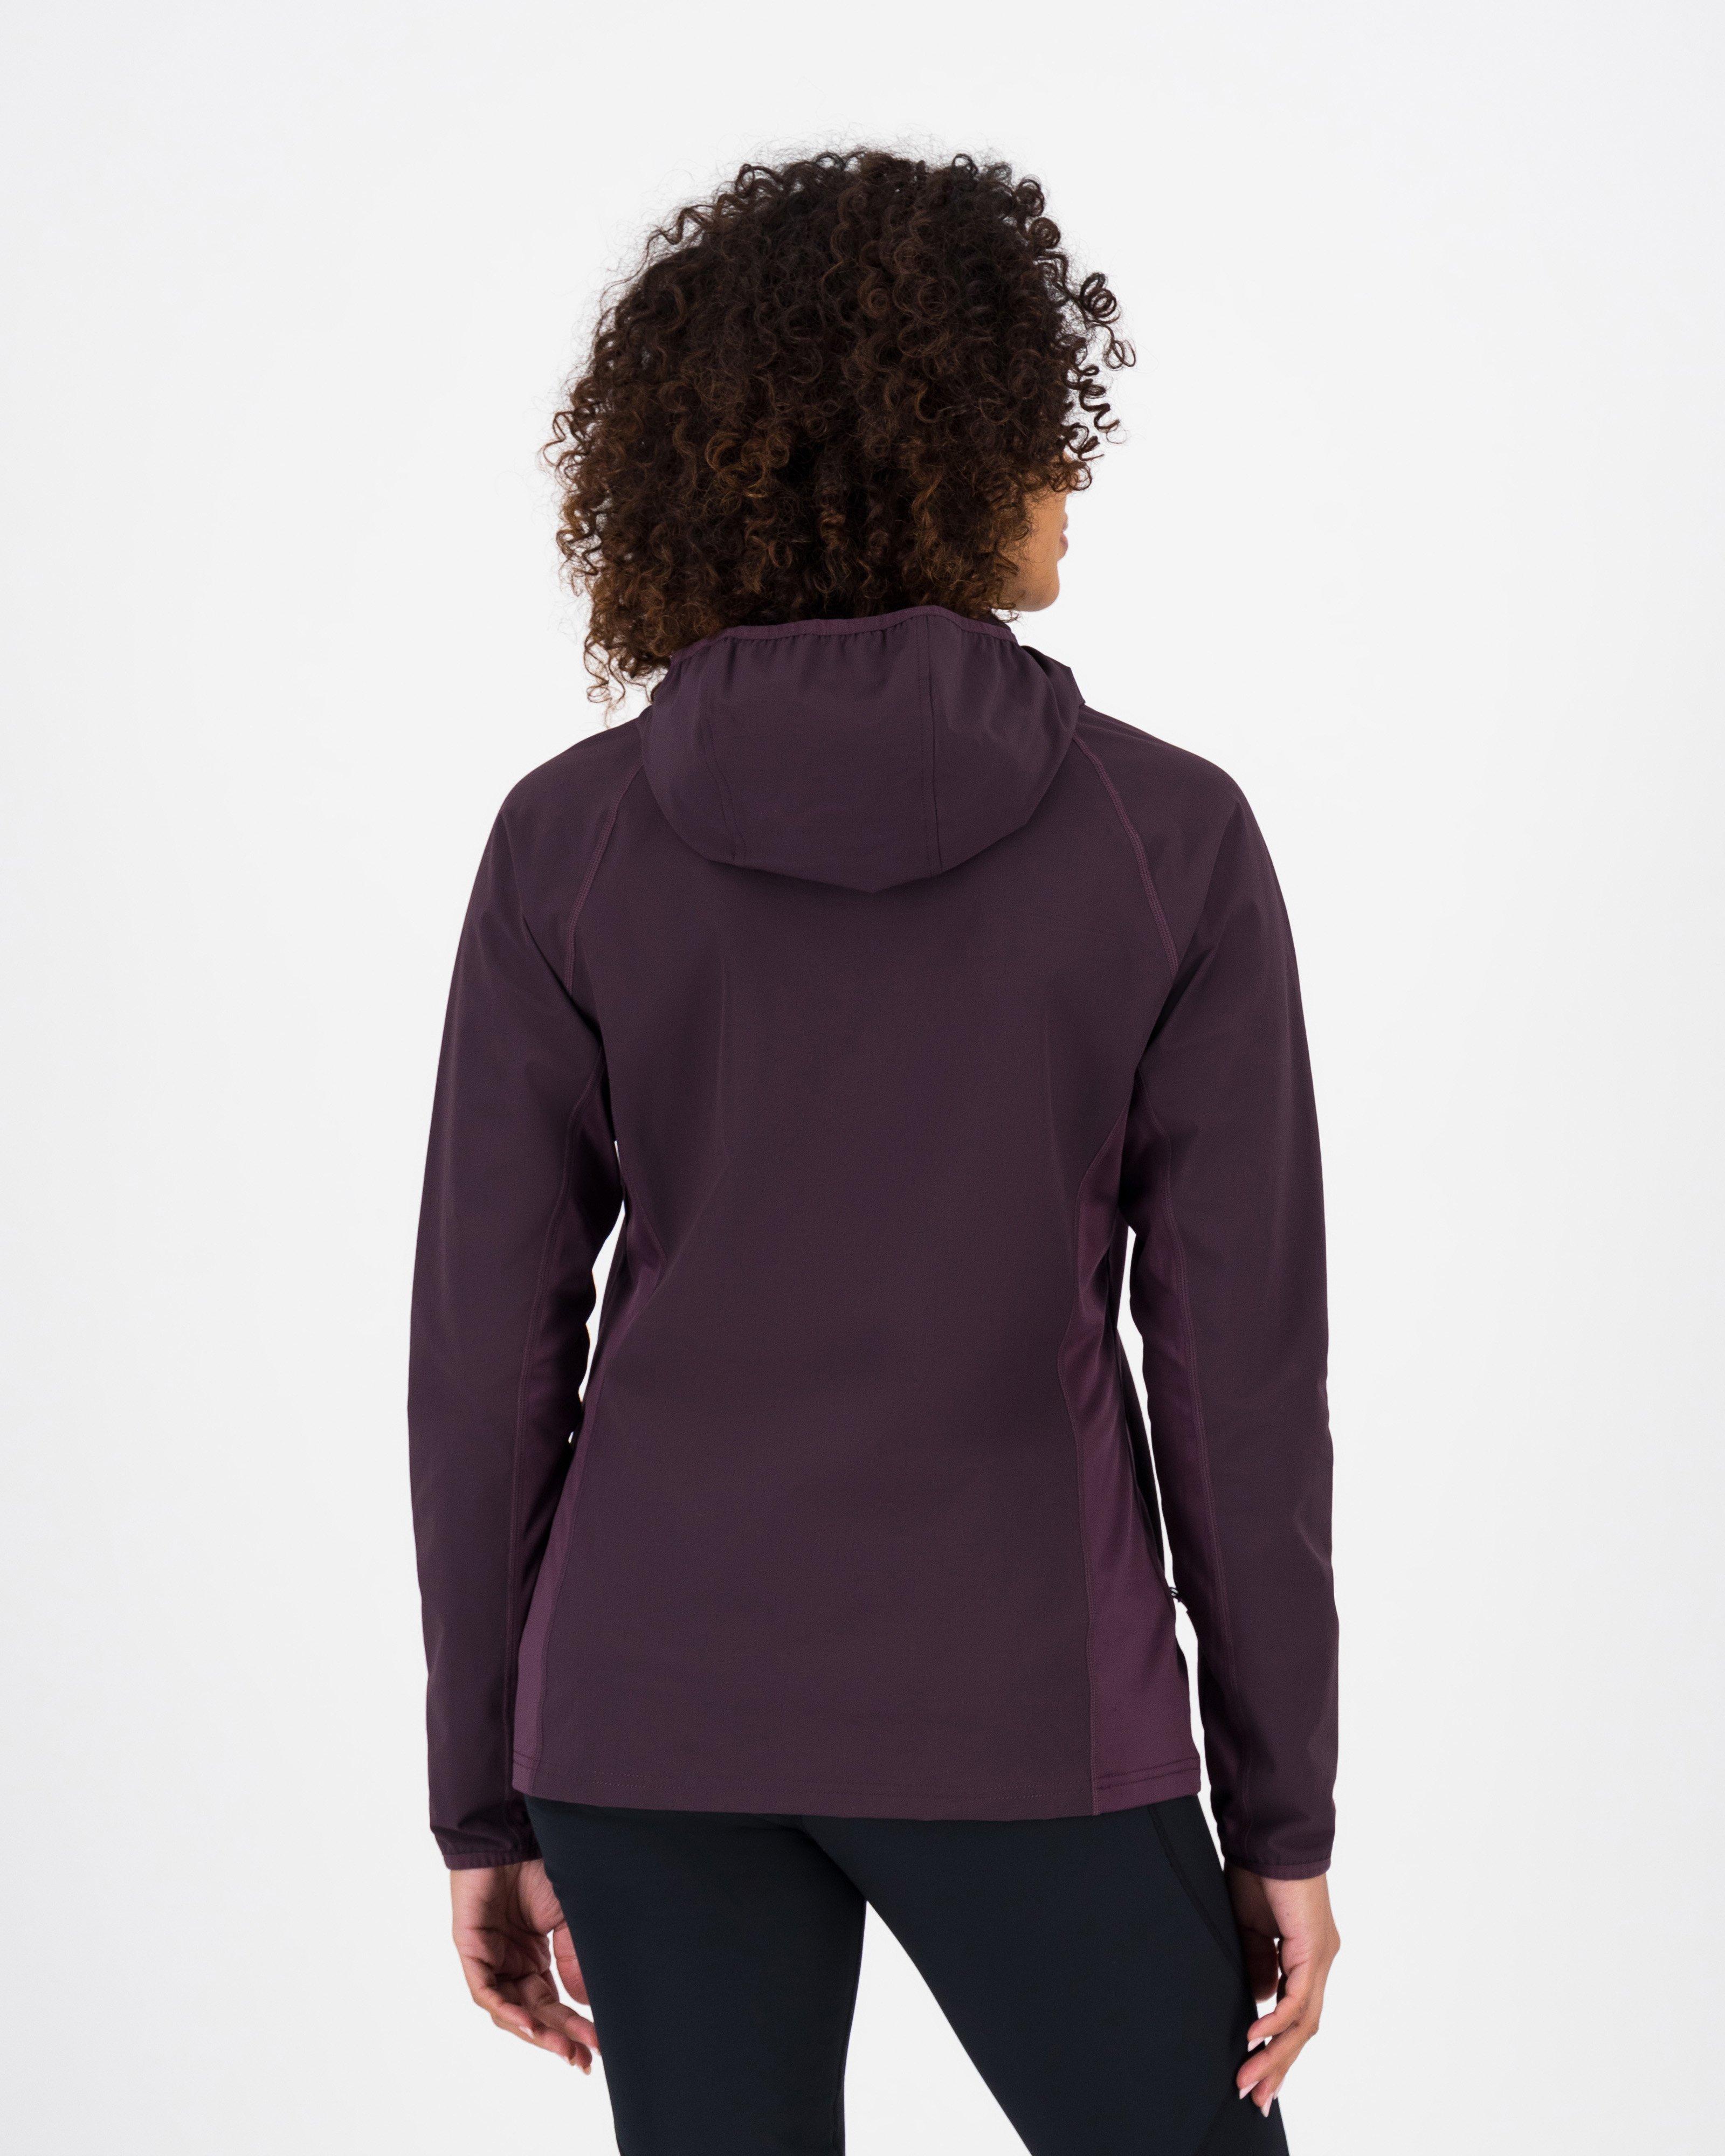 K-Way Women's Endurance Softshell Jacket -  Plum